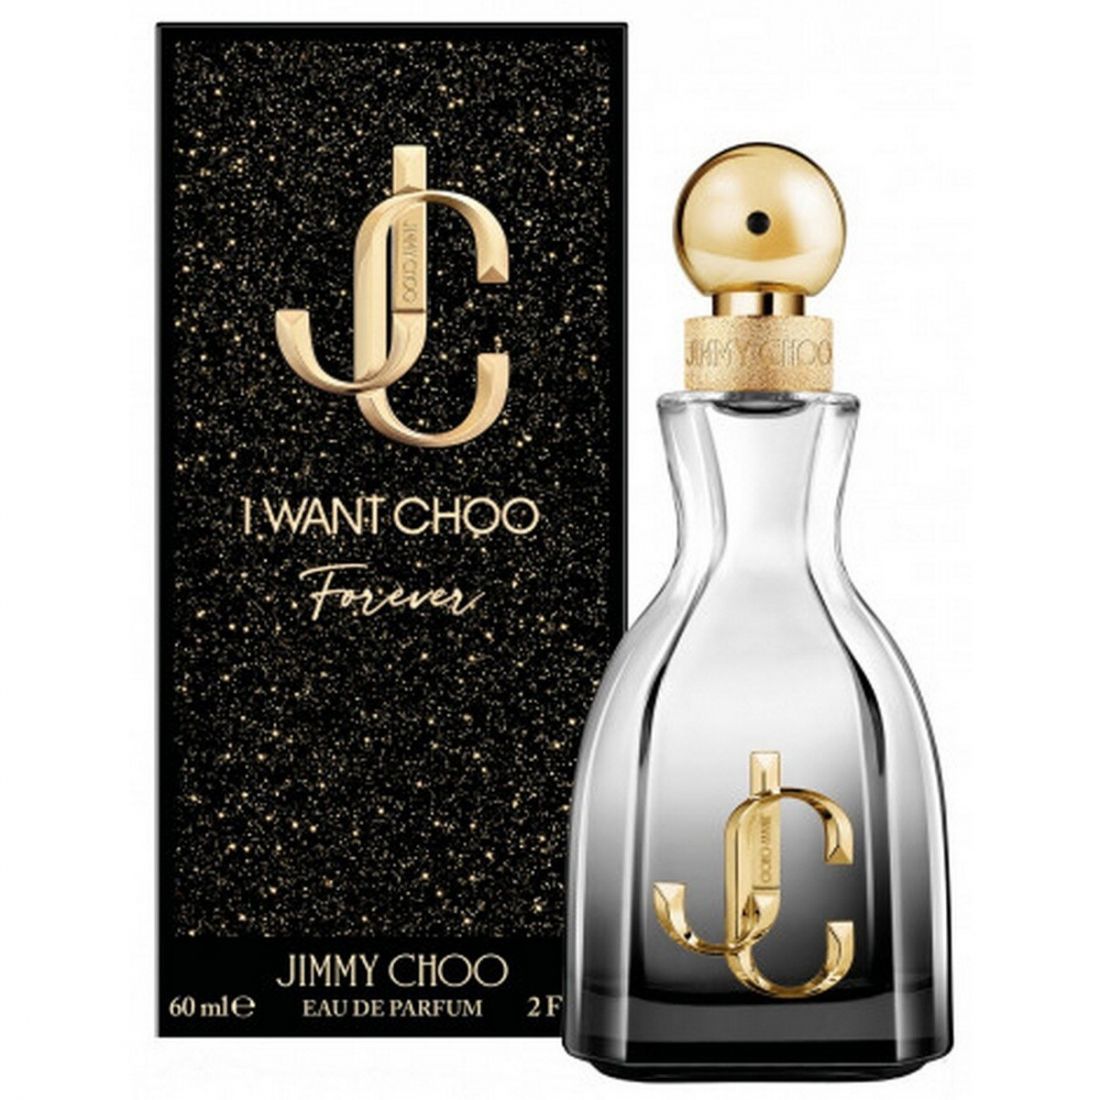 Jimmy Choo - Eau de parfum 'I Want Choo Forever' - 60 ml